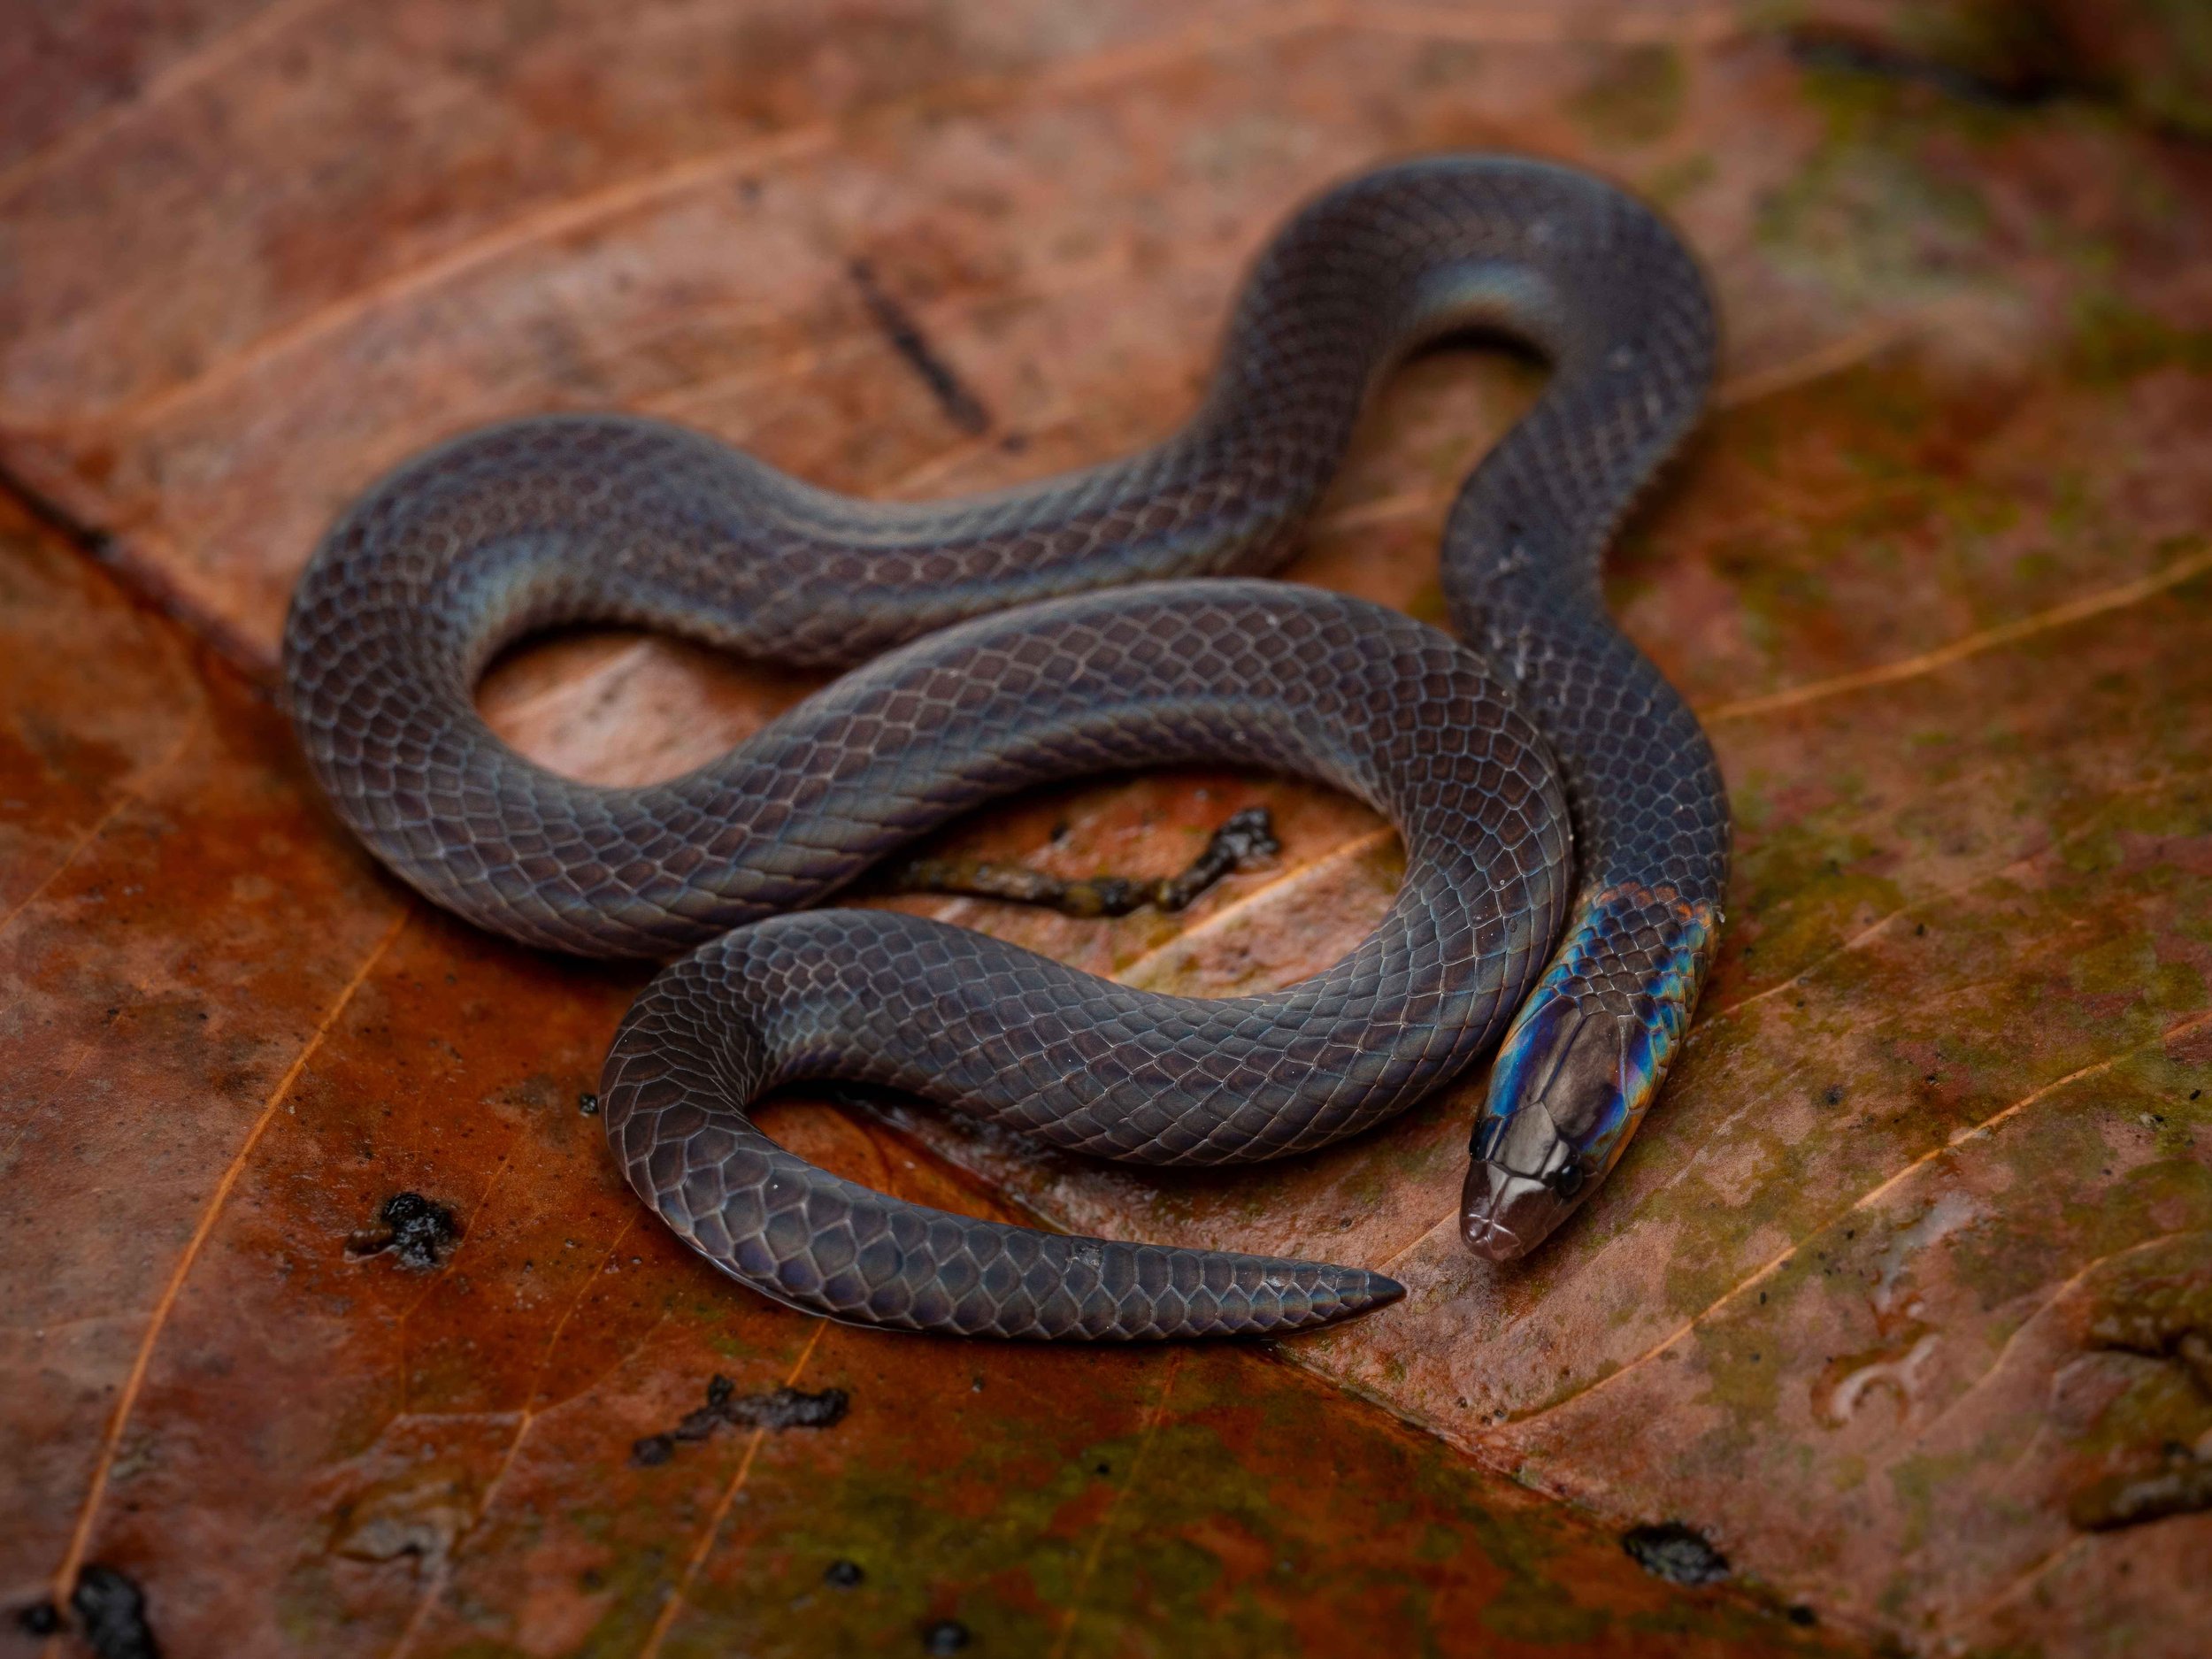 Dwarf reed snake - Pseudorabdion longiceps